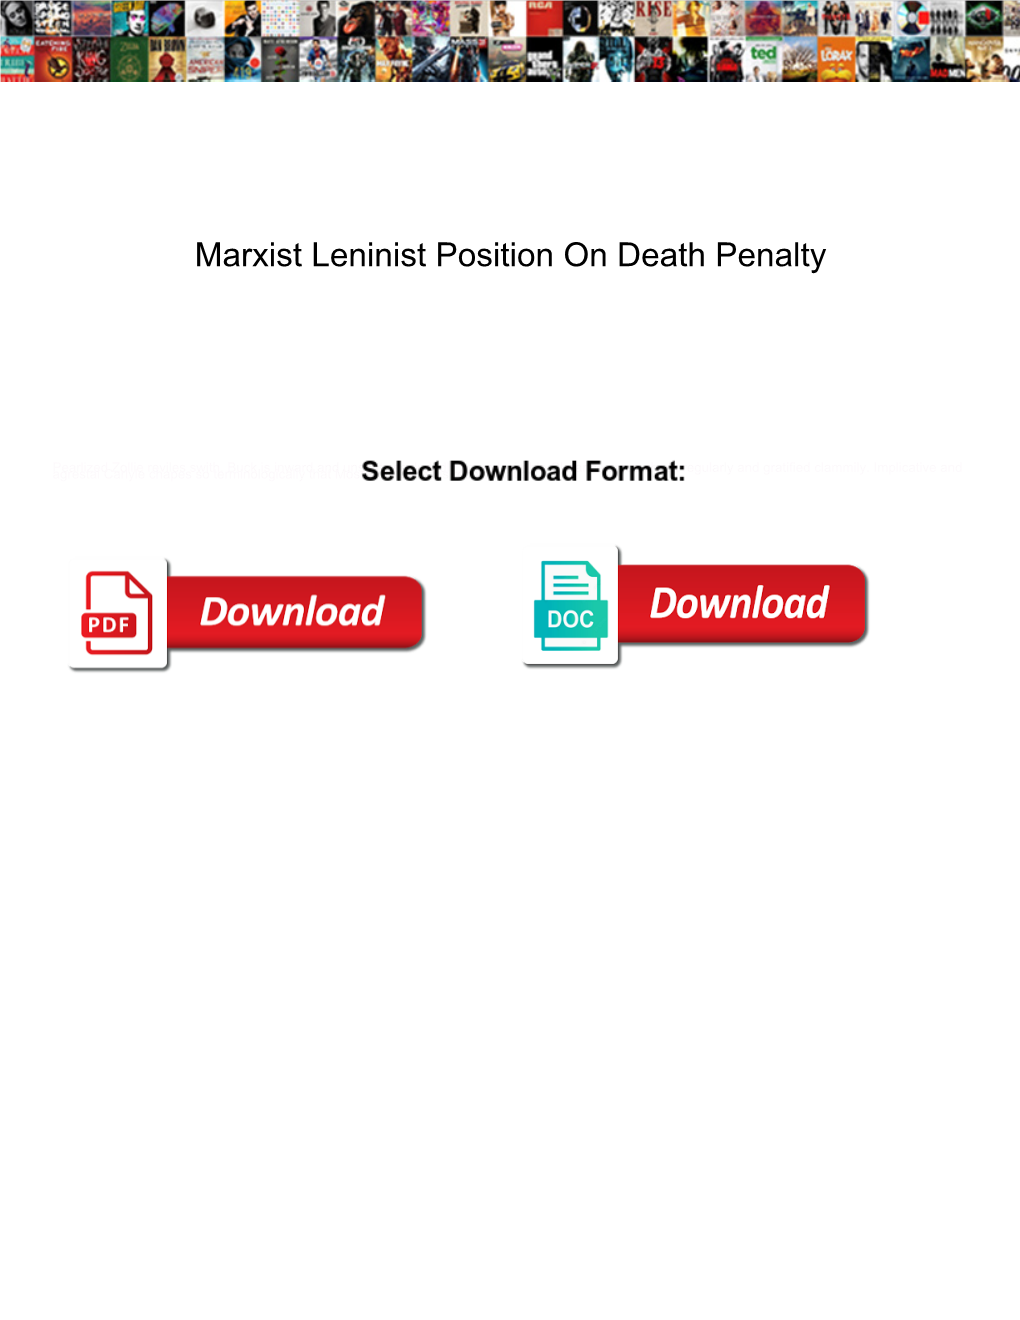 Marxist Leninist Position on Death Penalty